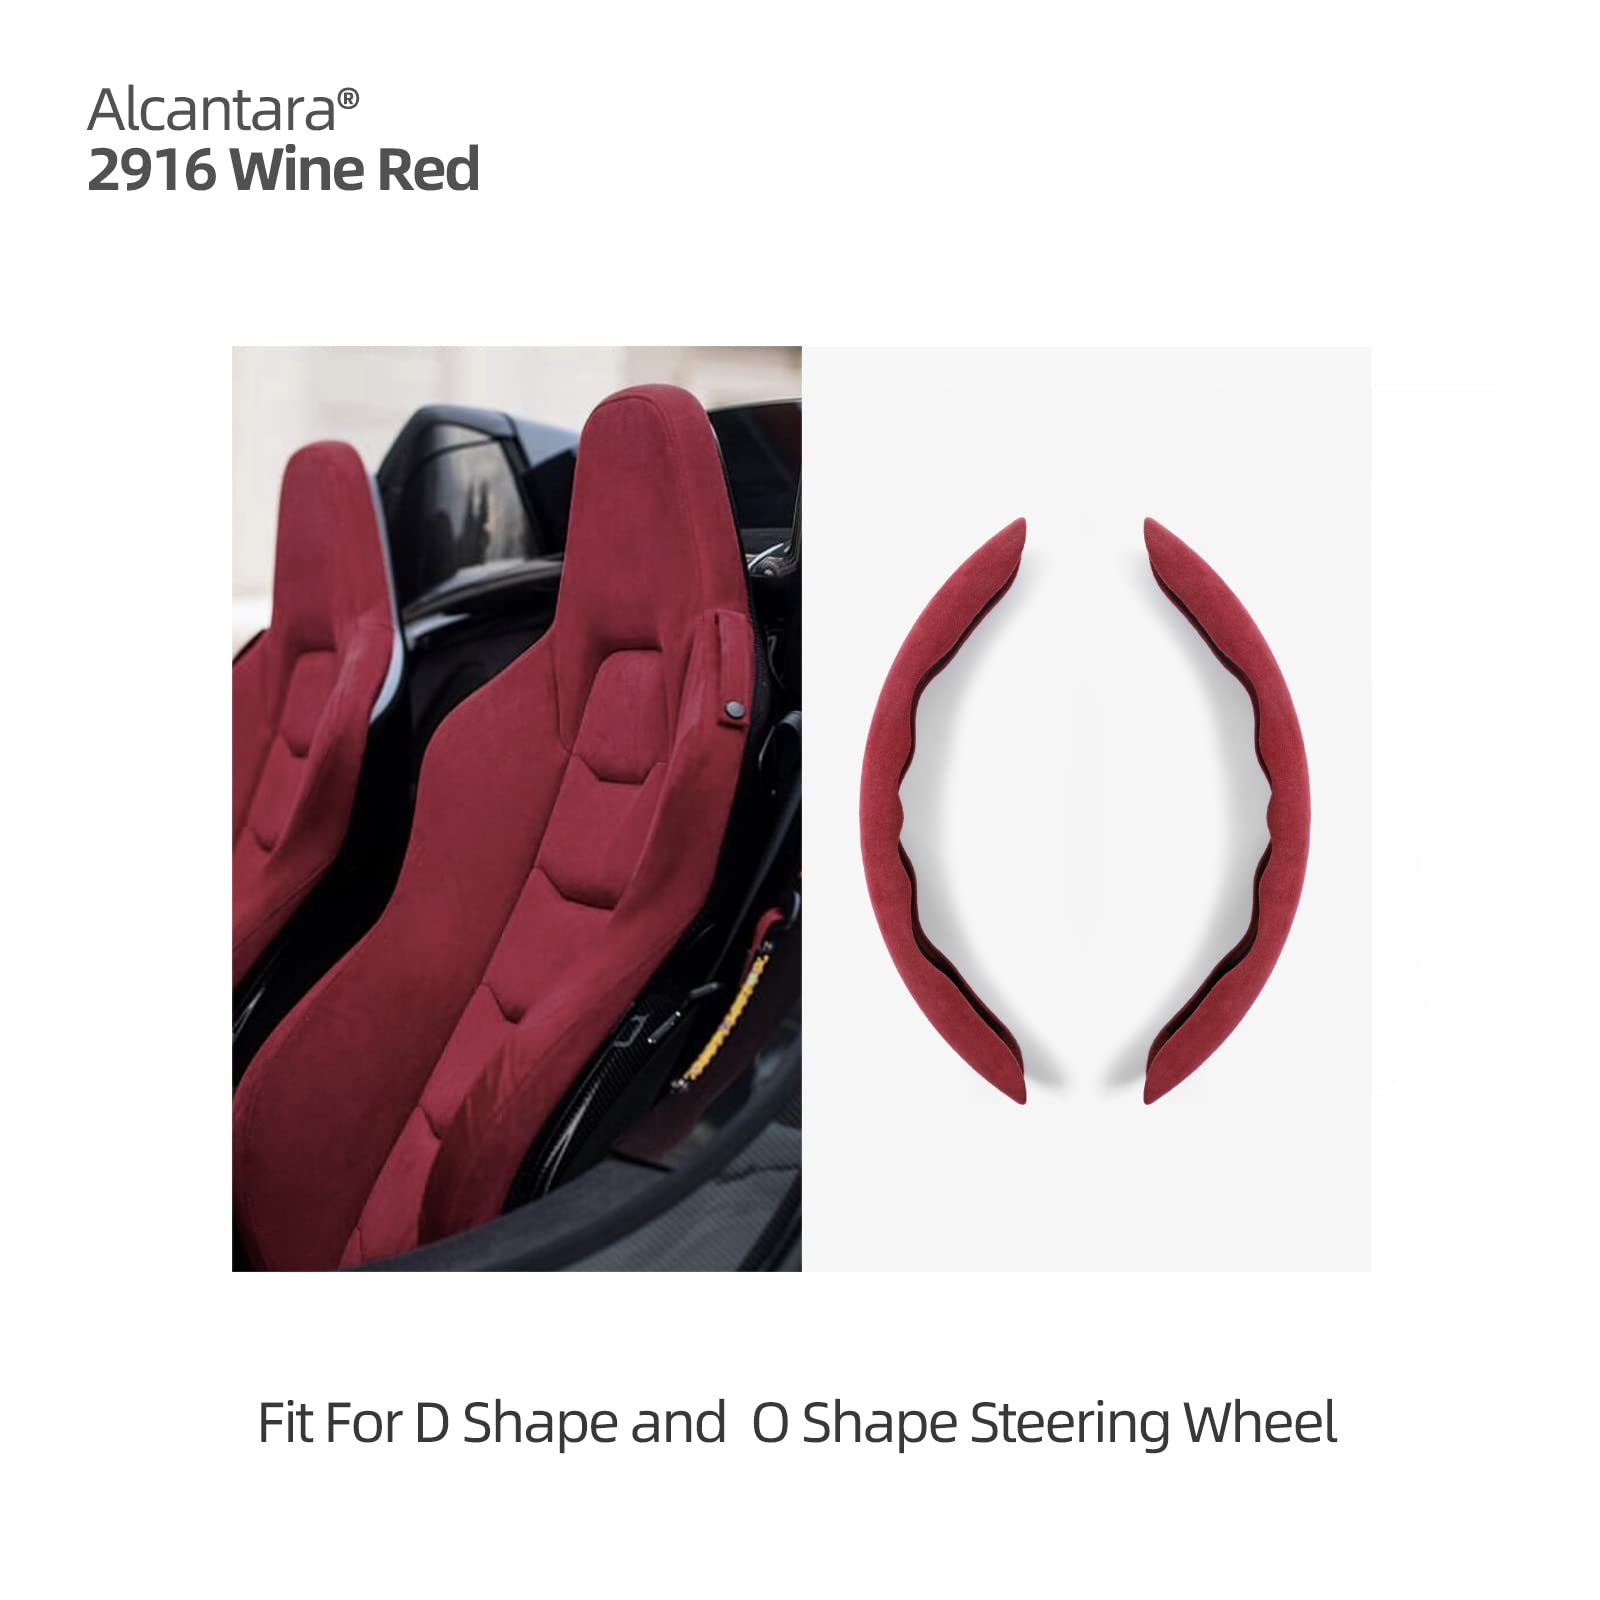 Steering Wheel Cover,Alcantara Leather Steering Wheel Grip,Fit 99% Car Wheel Protect Accessories (Red)